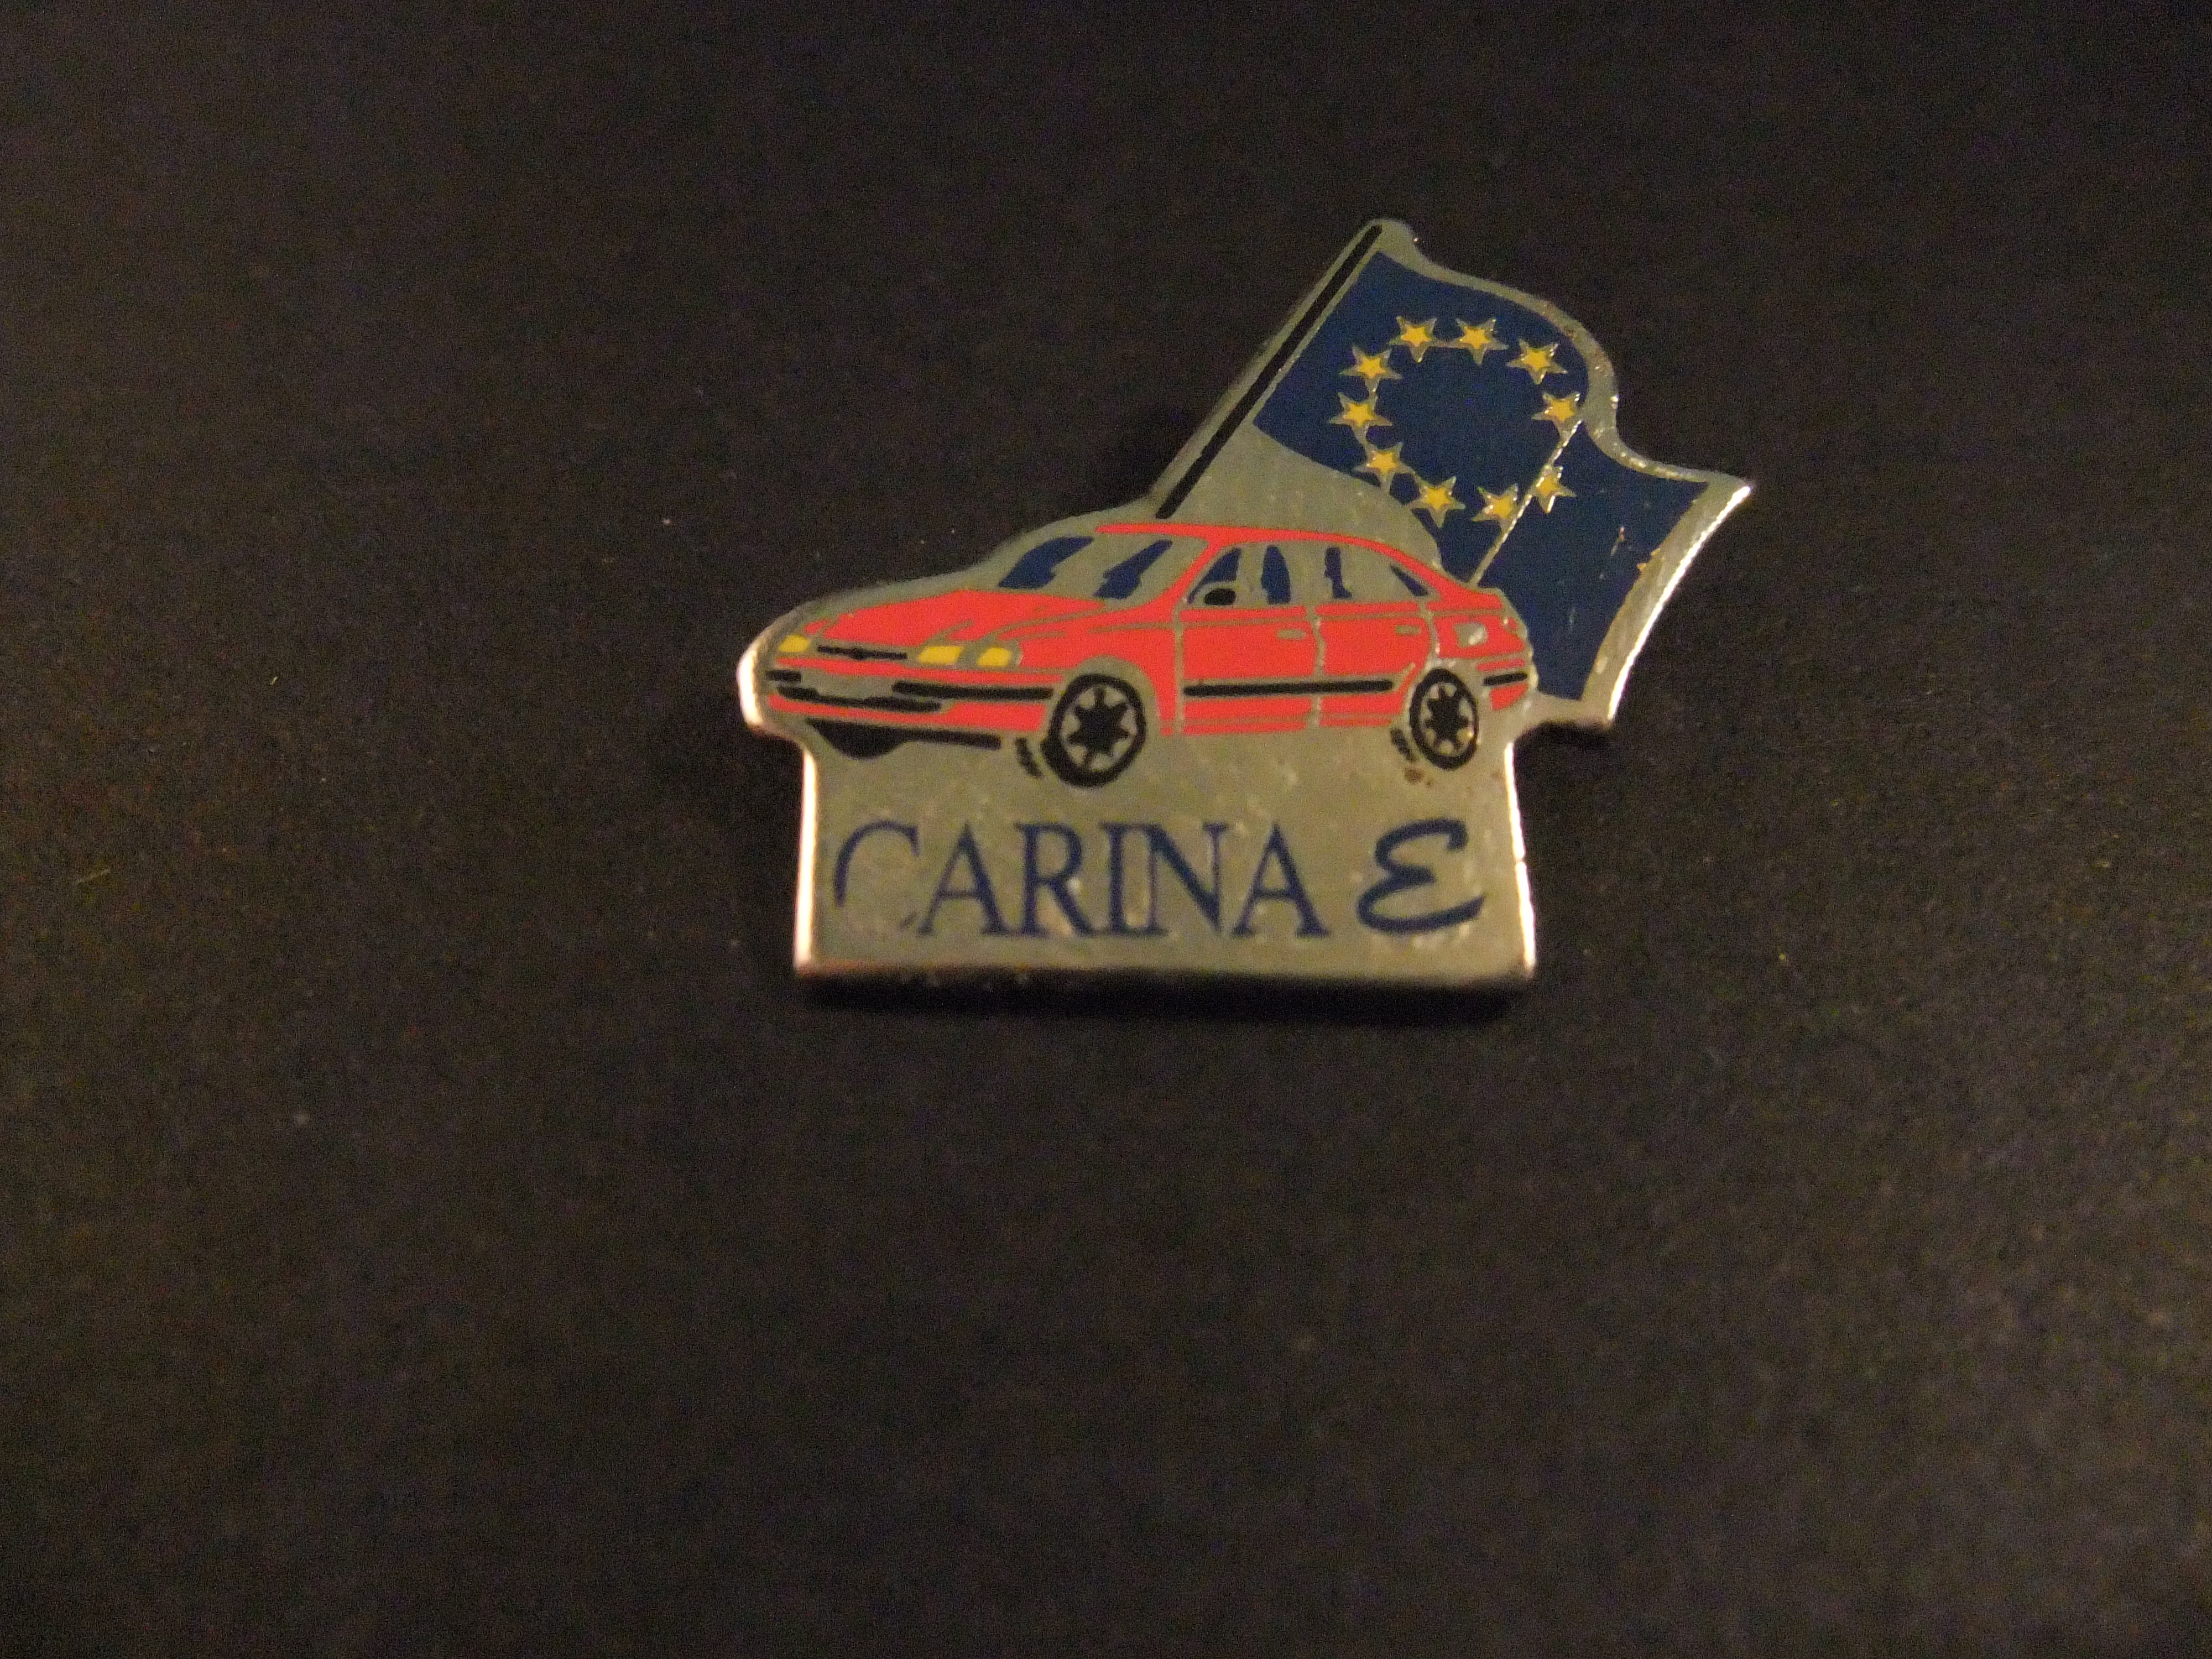 Toyota Carina compacte middenklasse personenauto, rood met Europese vlag